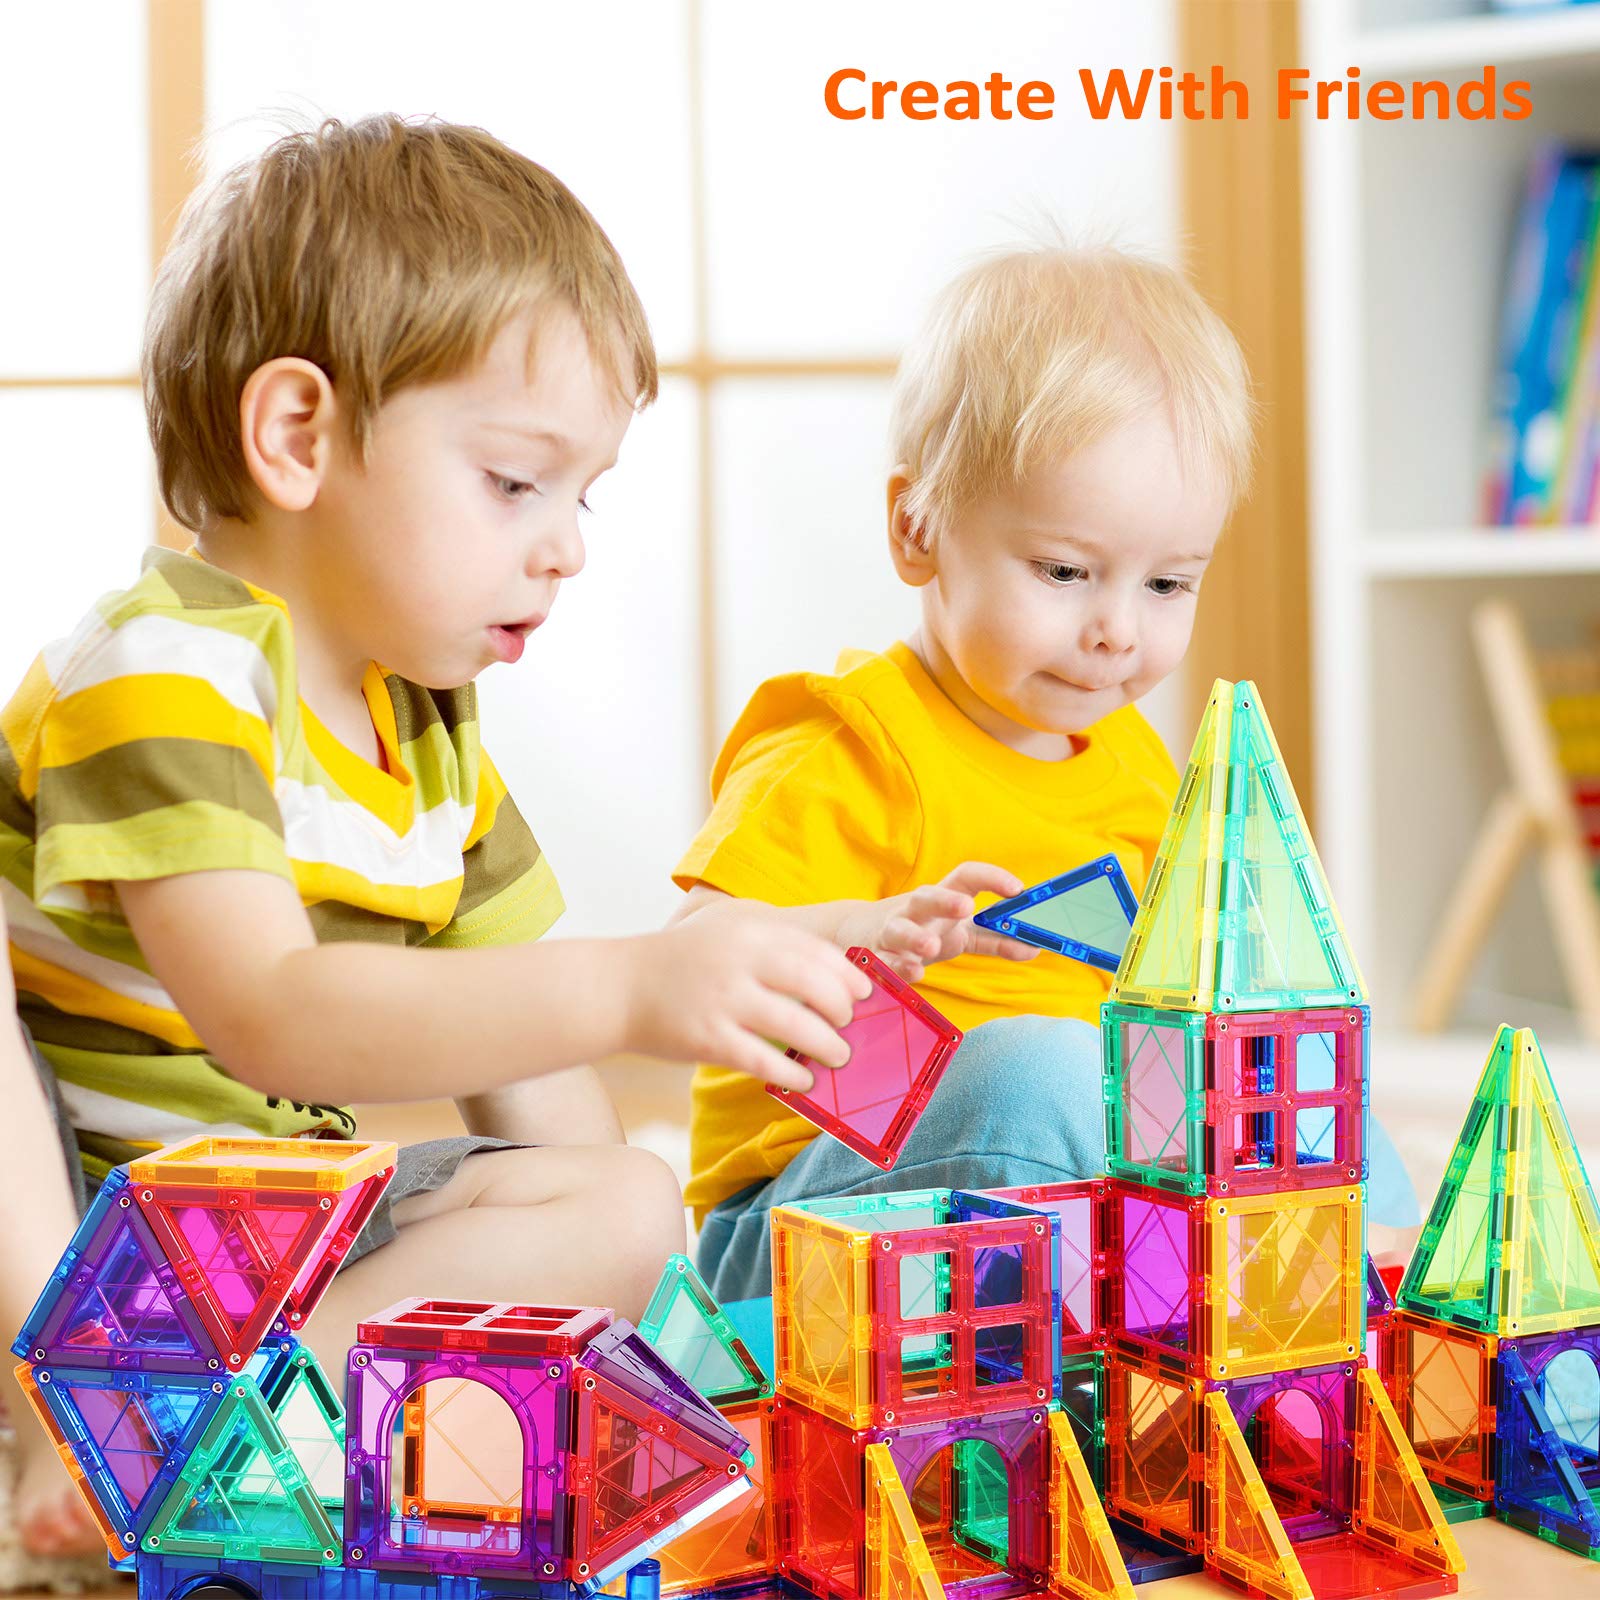 Magnetic Tiles for Kids 3D Magnet Building Tiles Set STEM Learning Toys Magnetic Toys Gift for 3+ Year Old Boys and Girls